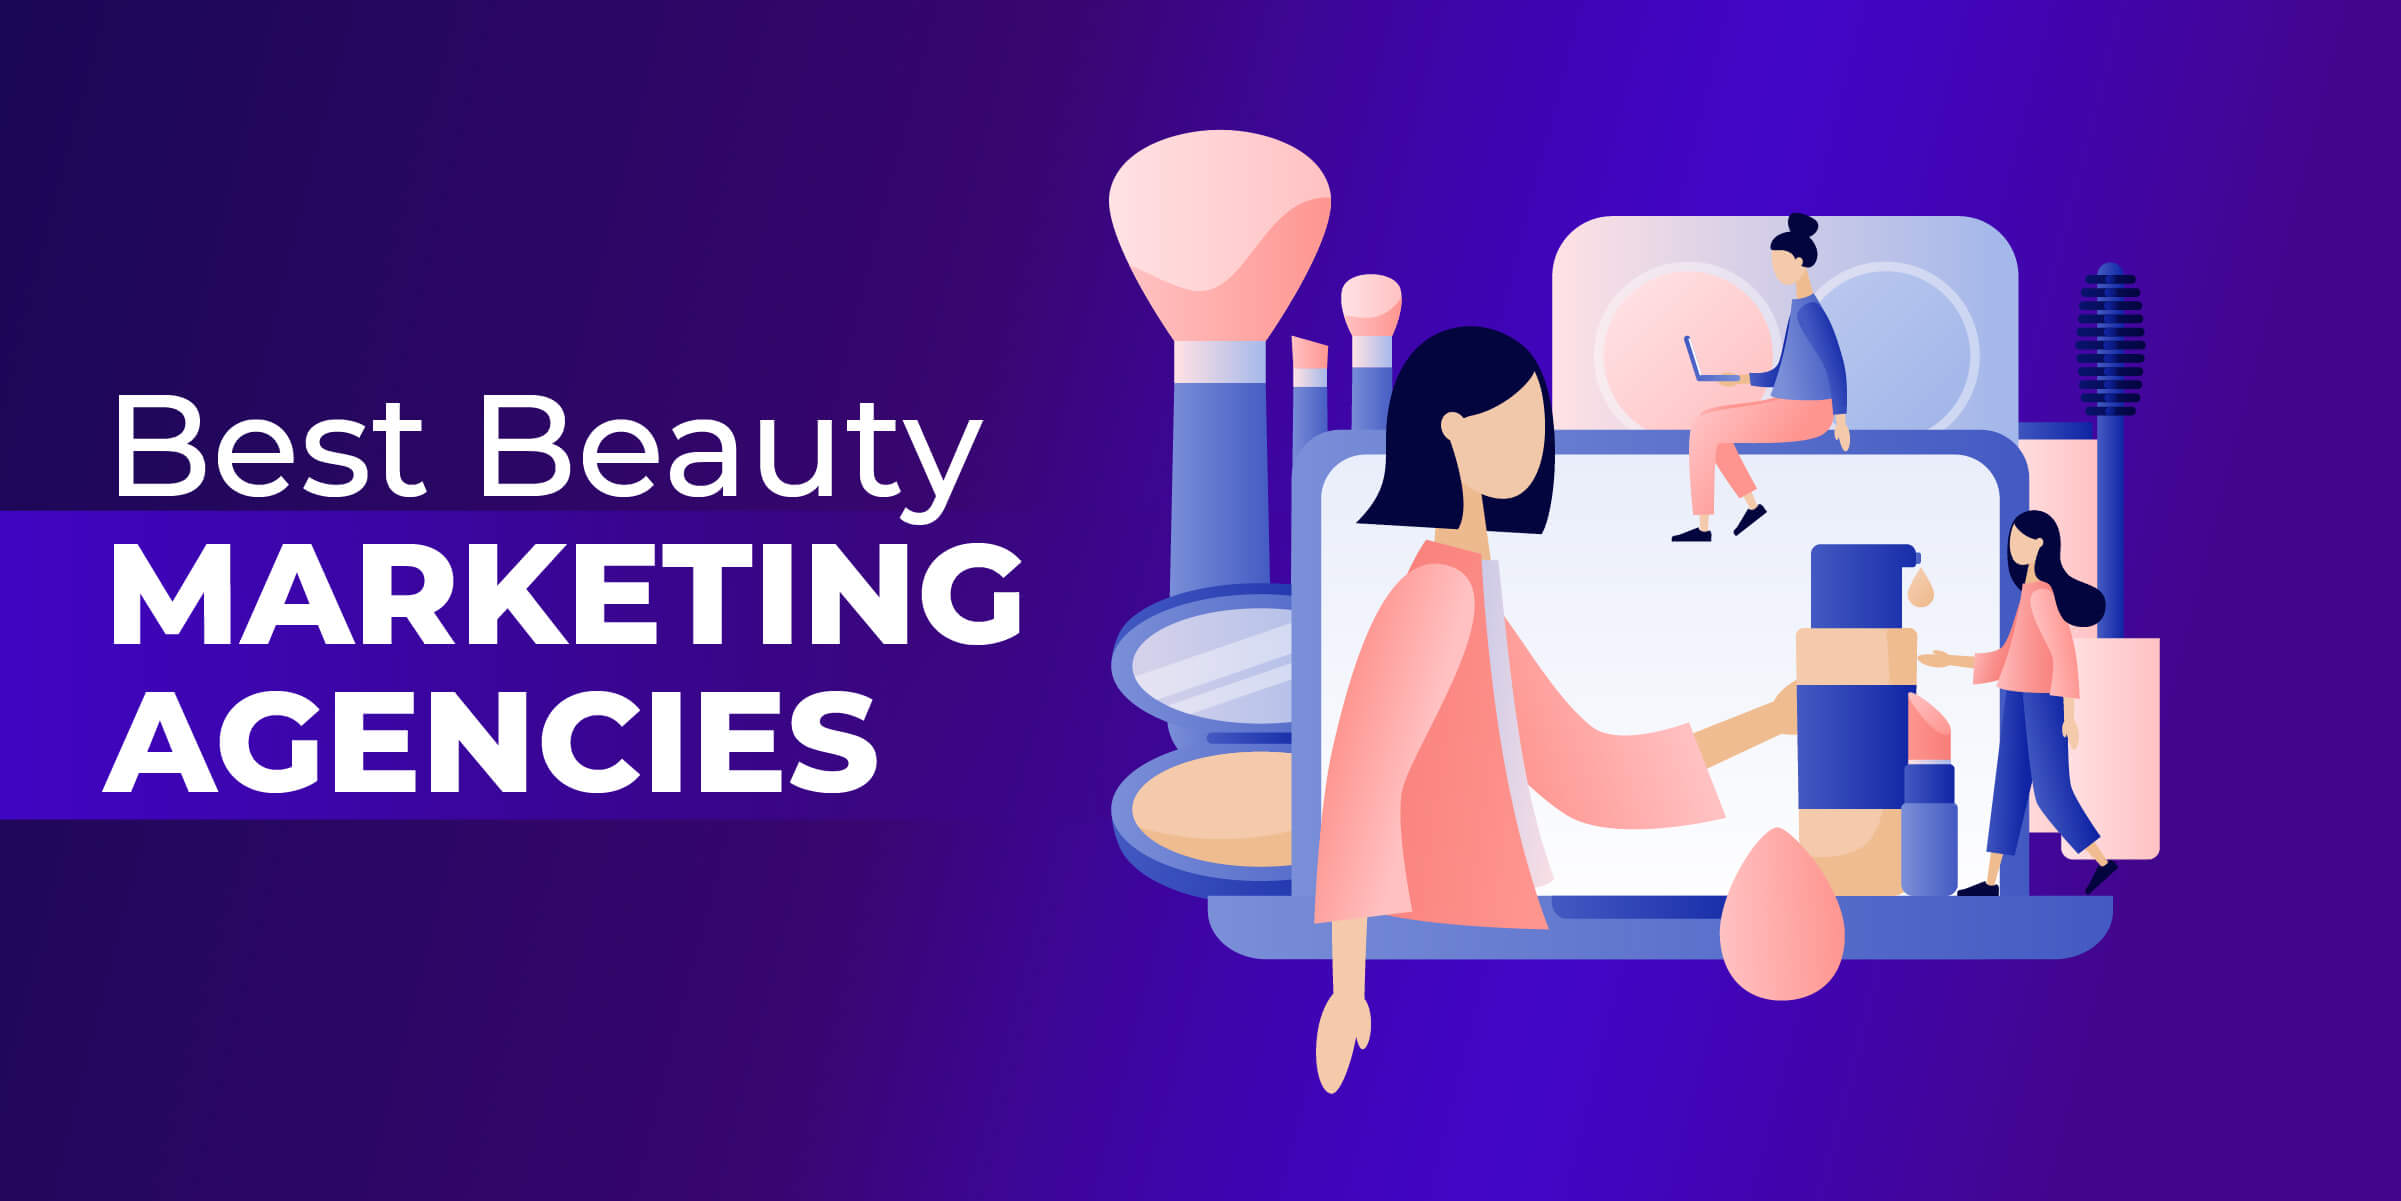 Best Beauty Marketing Agencies